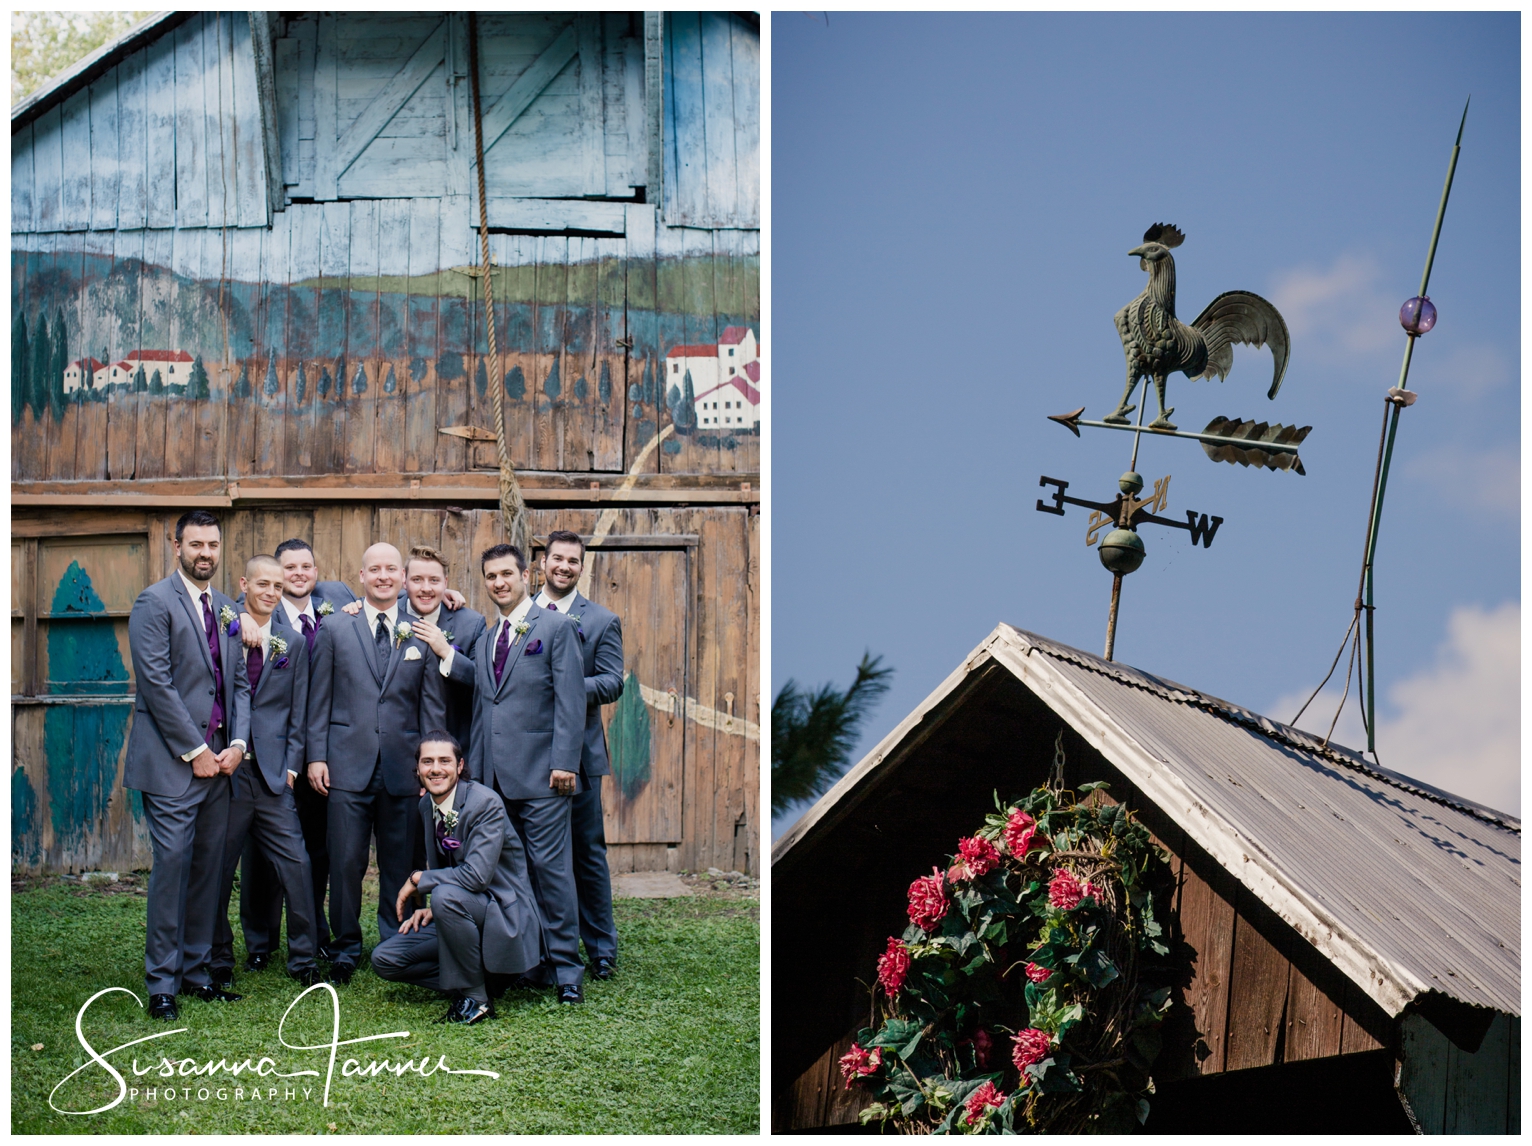 Indianapolis Outdoor Wedding, groomsmen, weather vane on top of barn